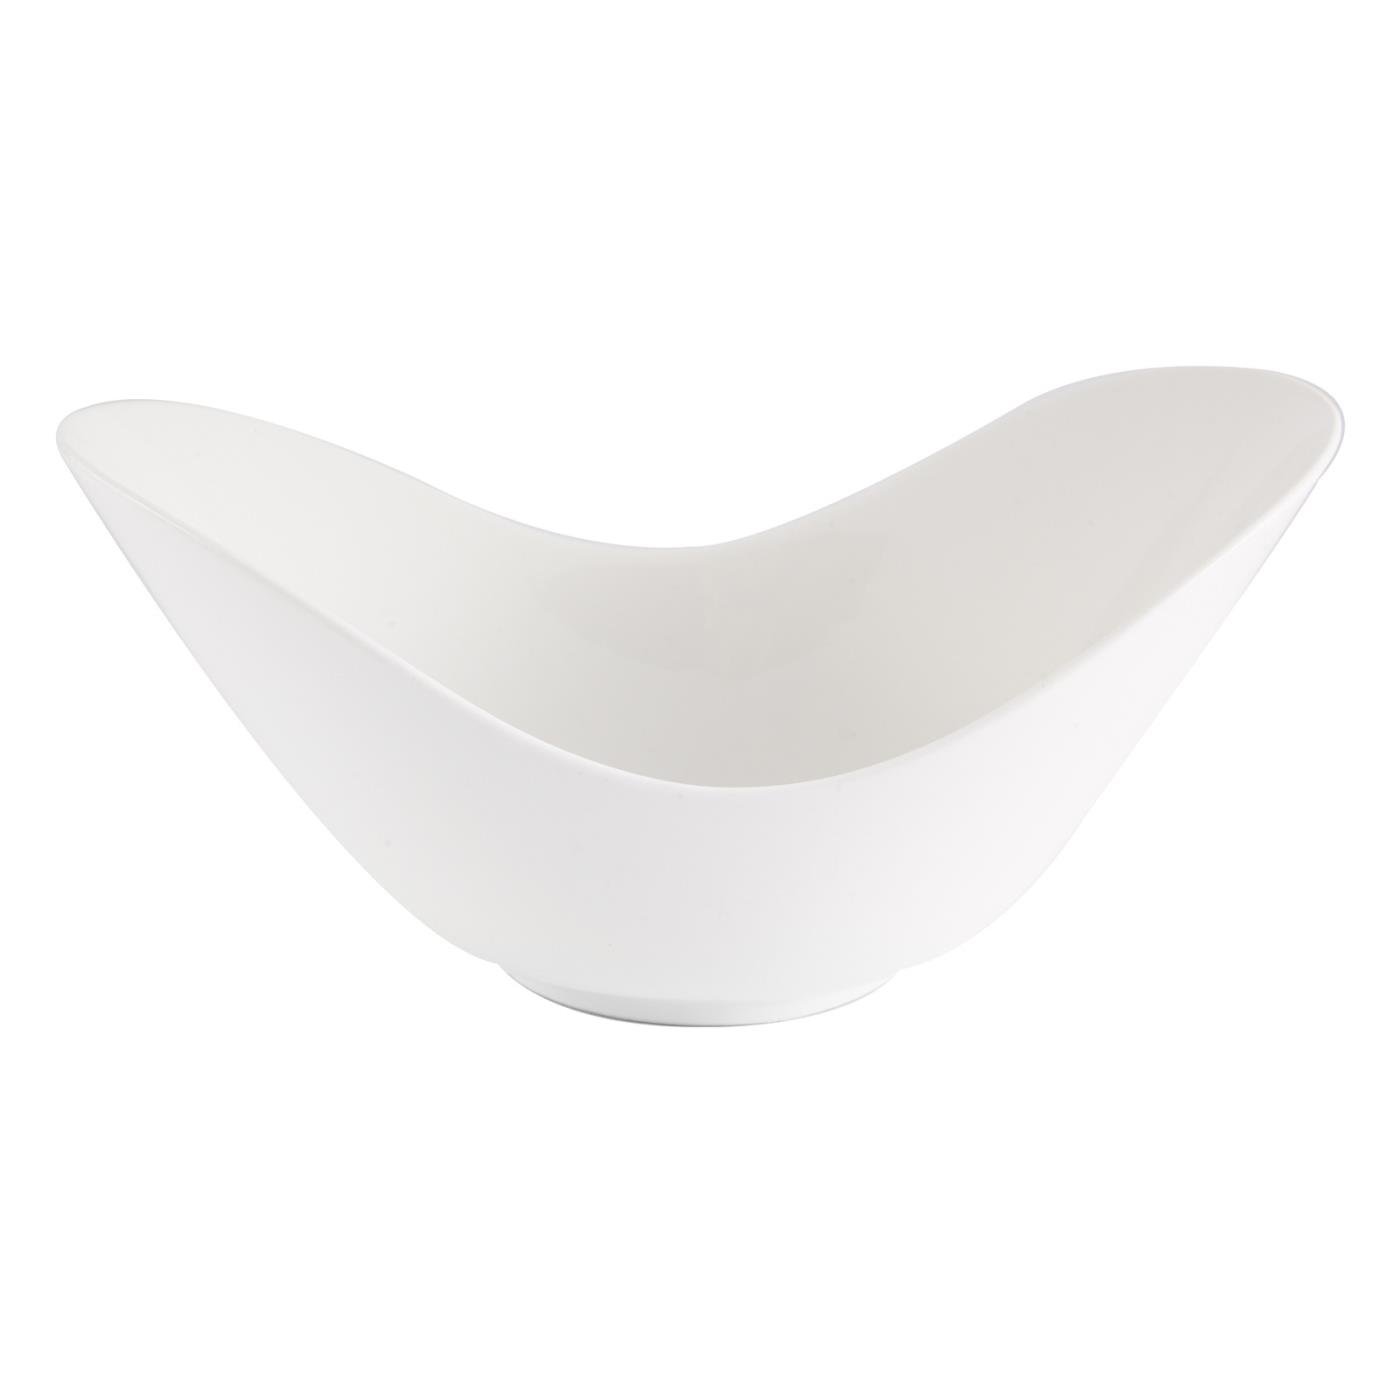 White Ceramic Spirit Bowl - 10.5"